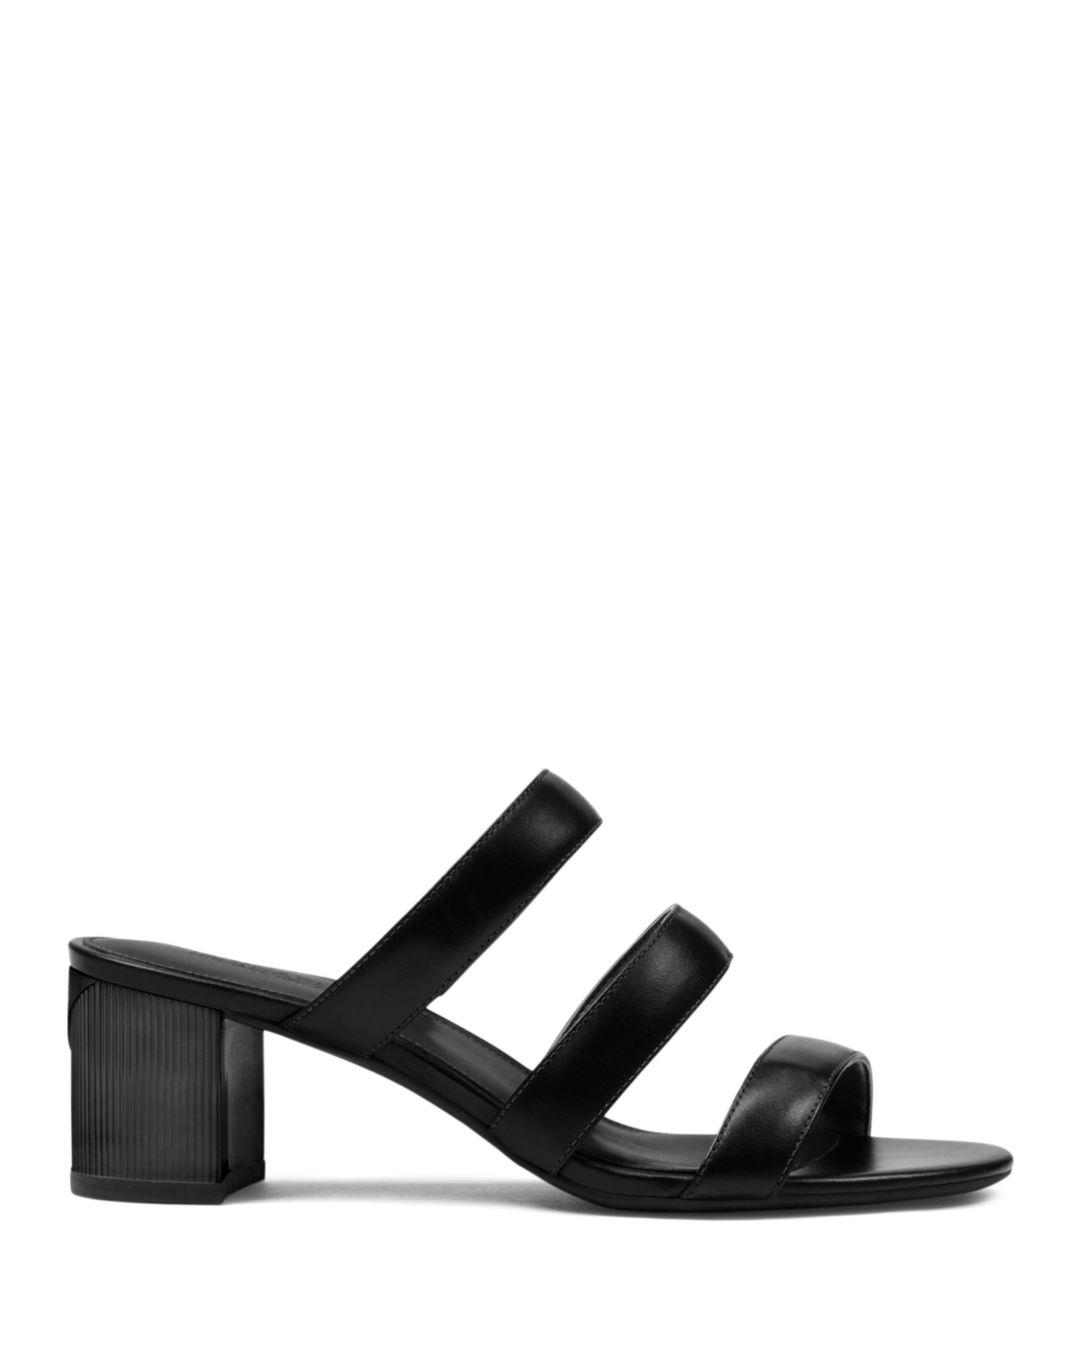 MICHAEL Michael Kors Women's Paloma Flex Slide Sandals in Black - Lyst